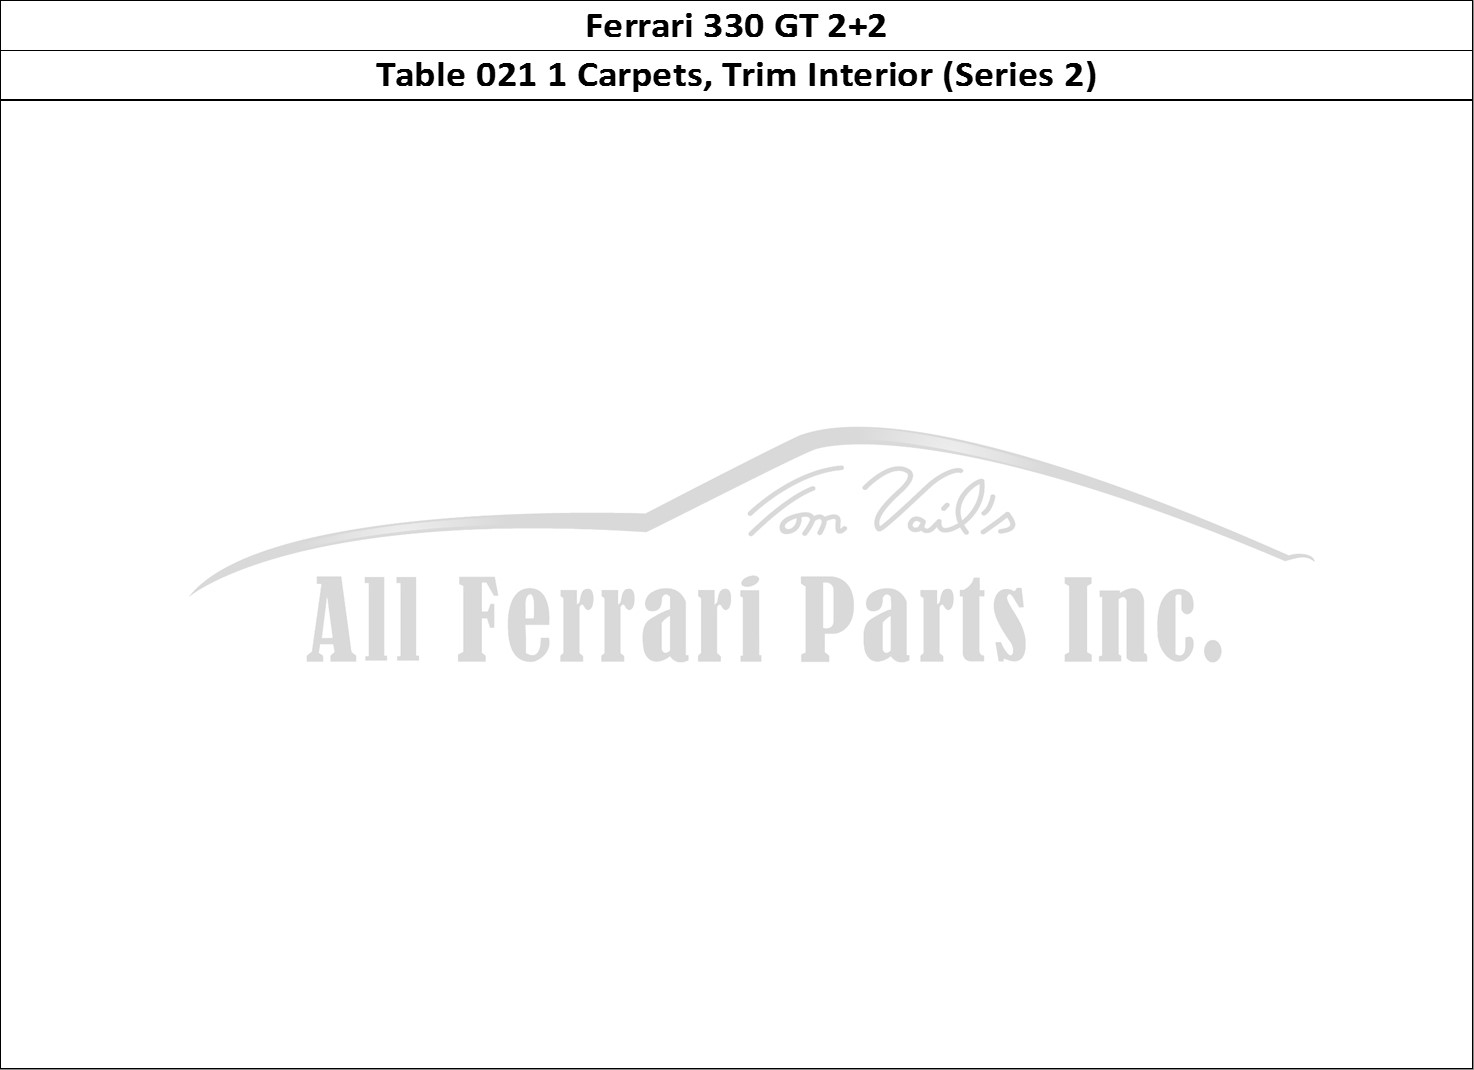 Ferrari Parts Ferrari 330 GT 2+2 (Coachwork) Page 021 Inner Carpets (edition 2